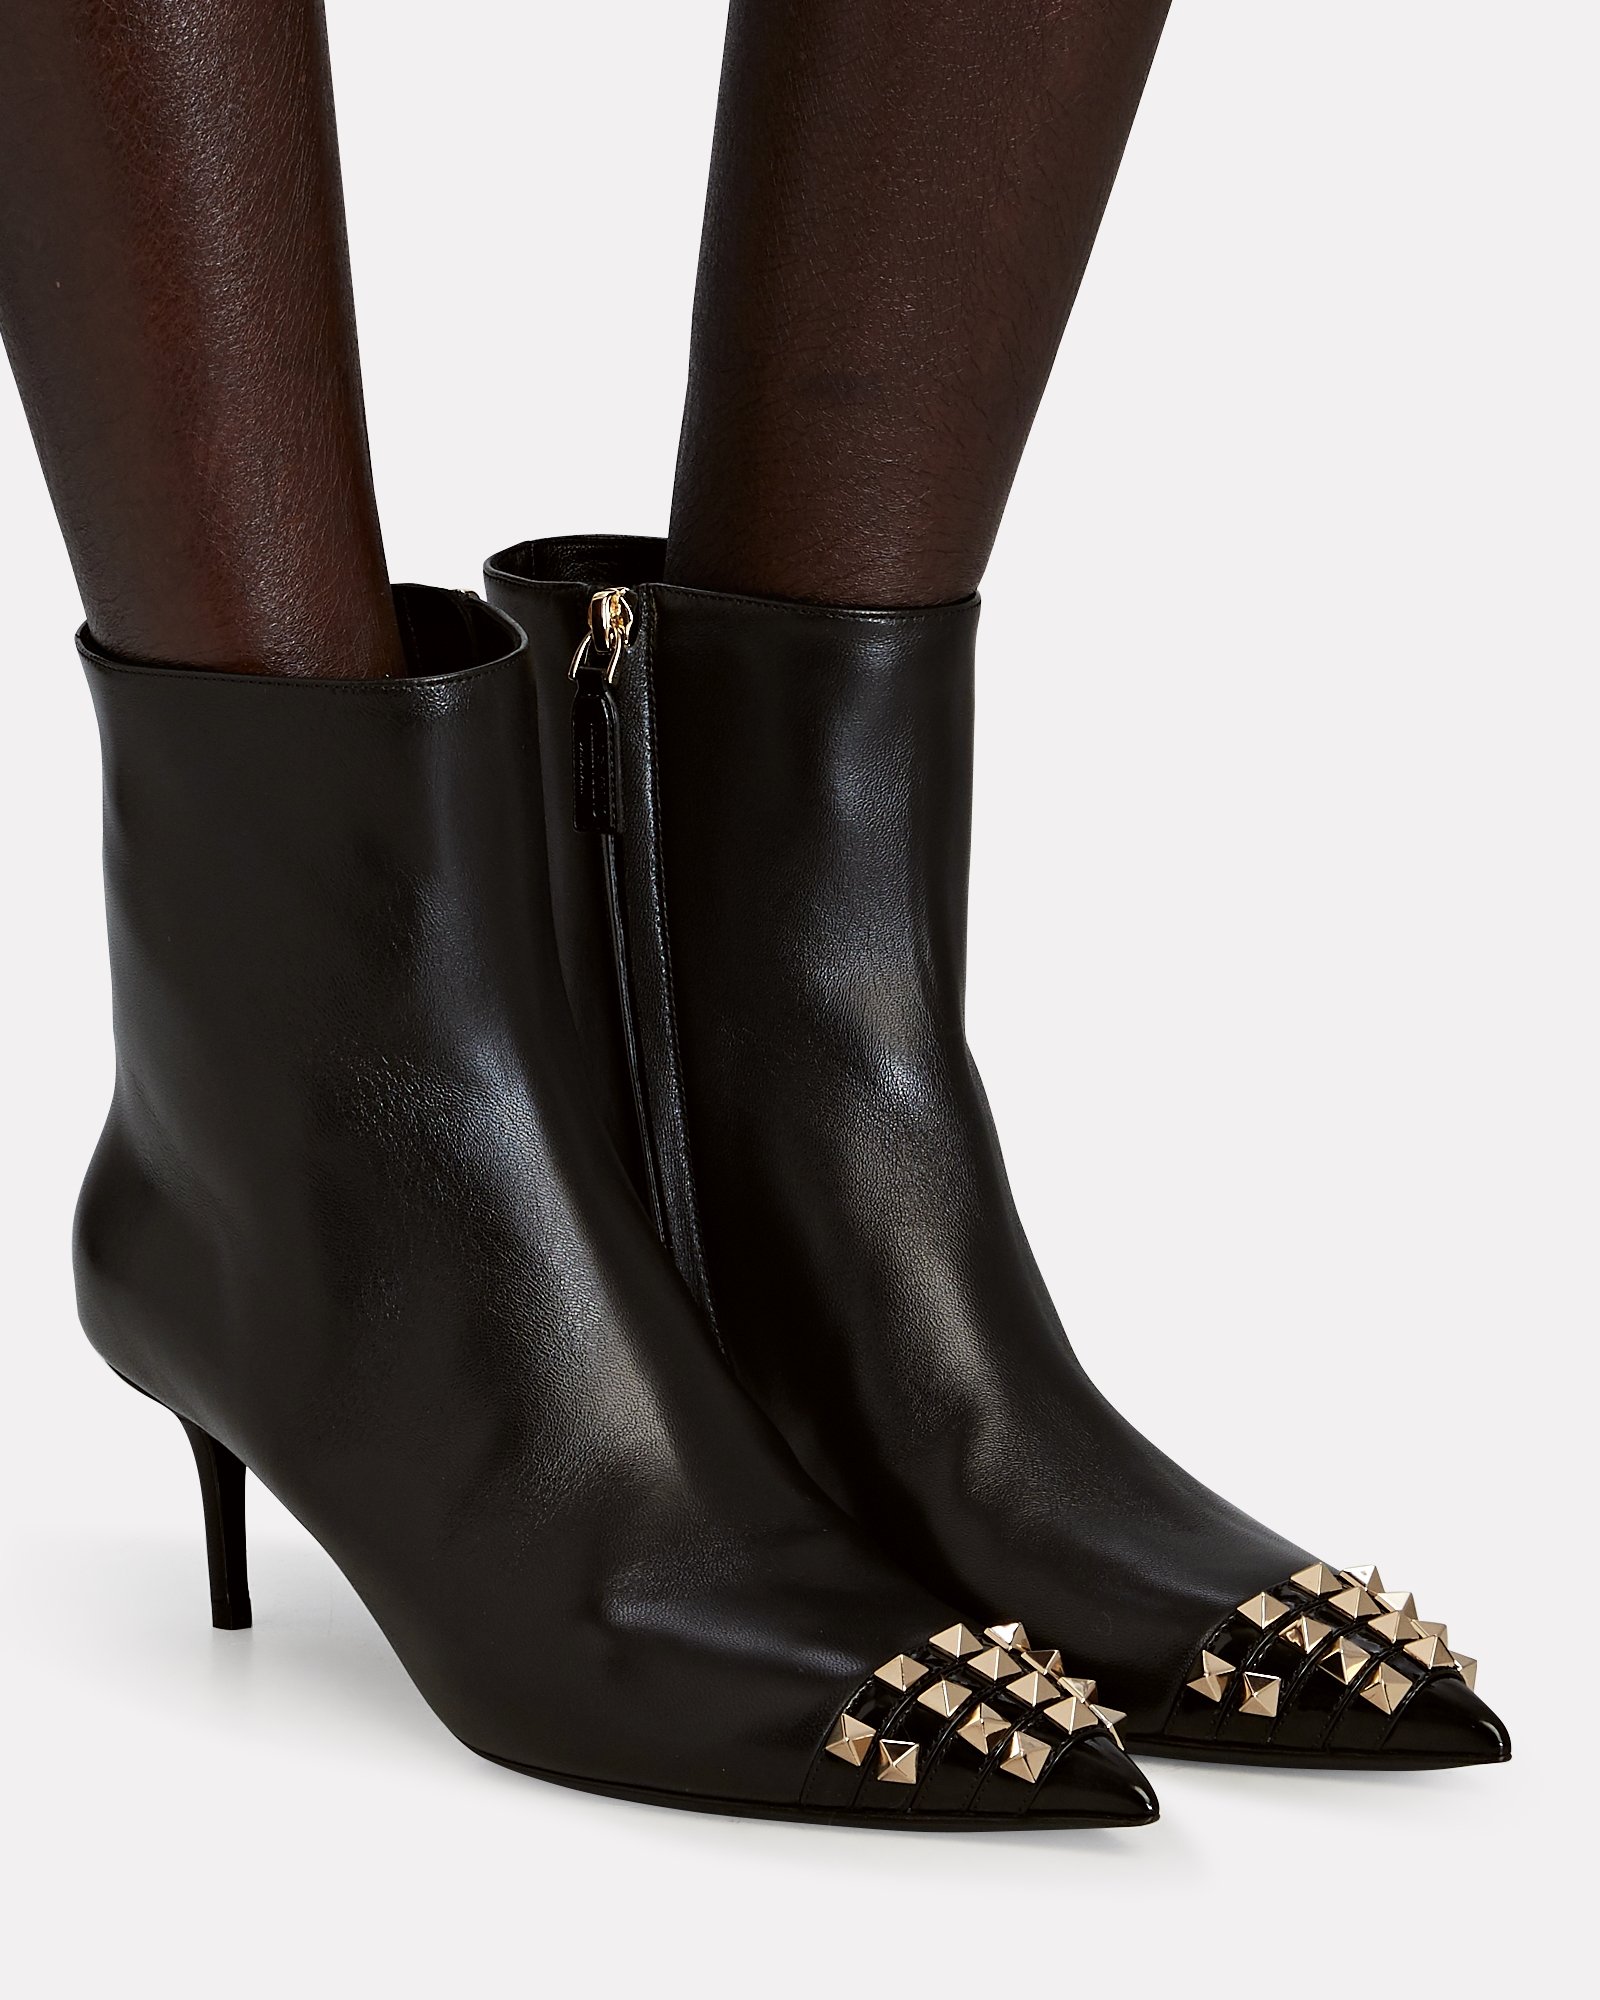 Valentino Garavani Rockstud Leather Ankle Boots | INTERMIX®